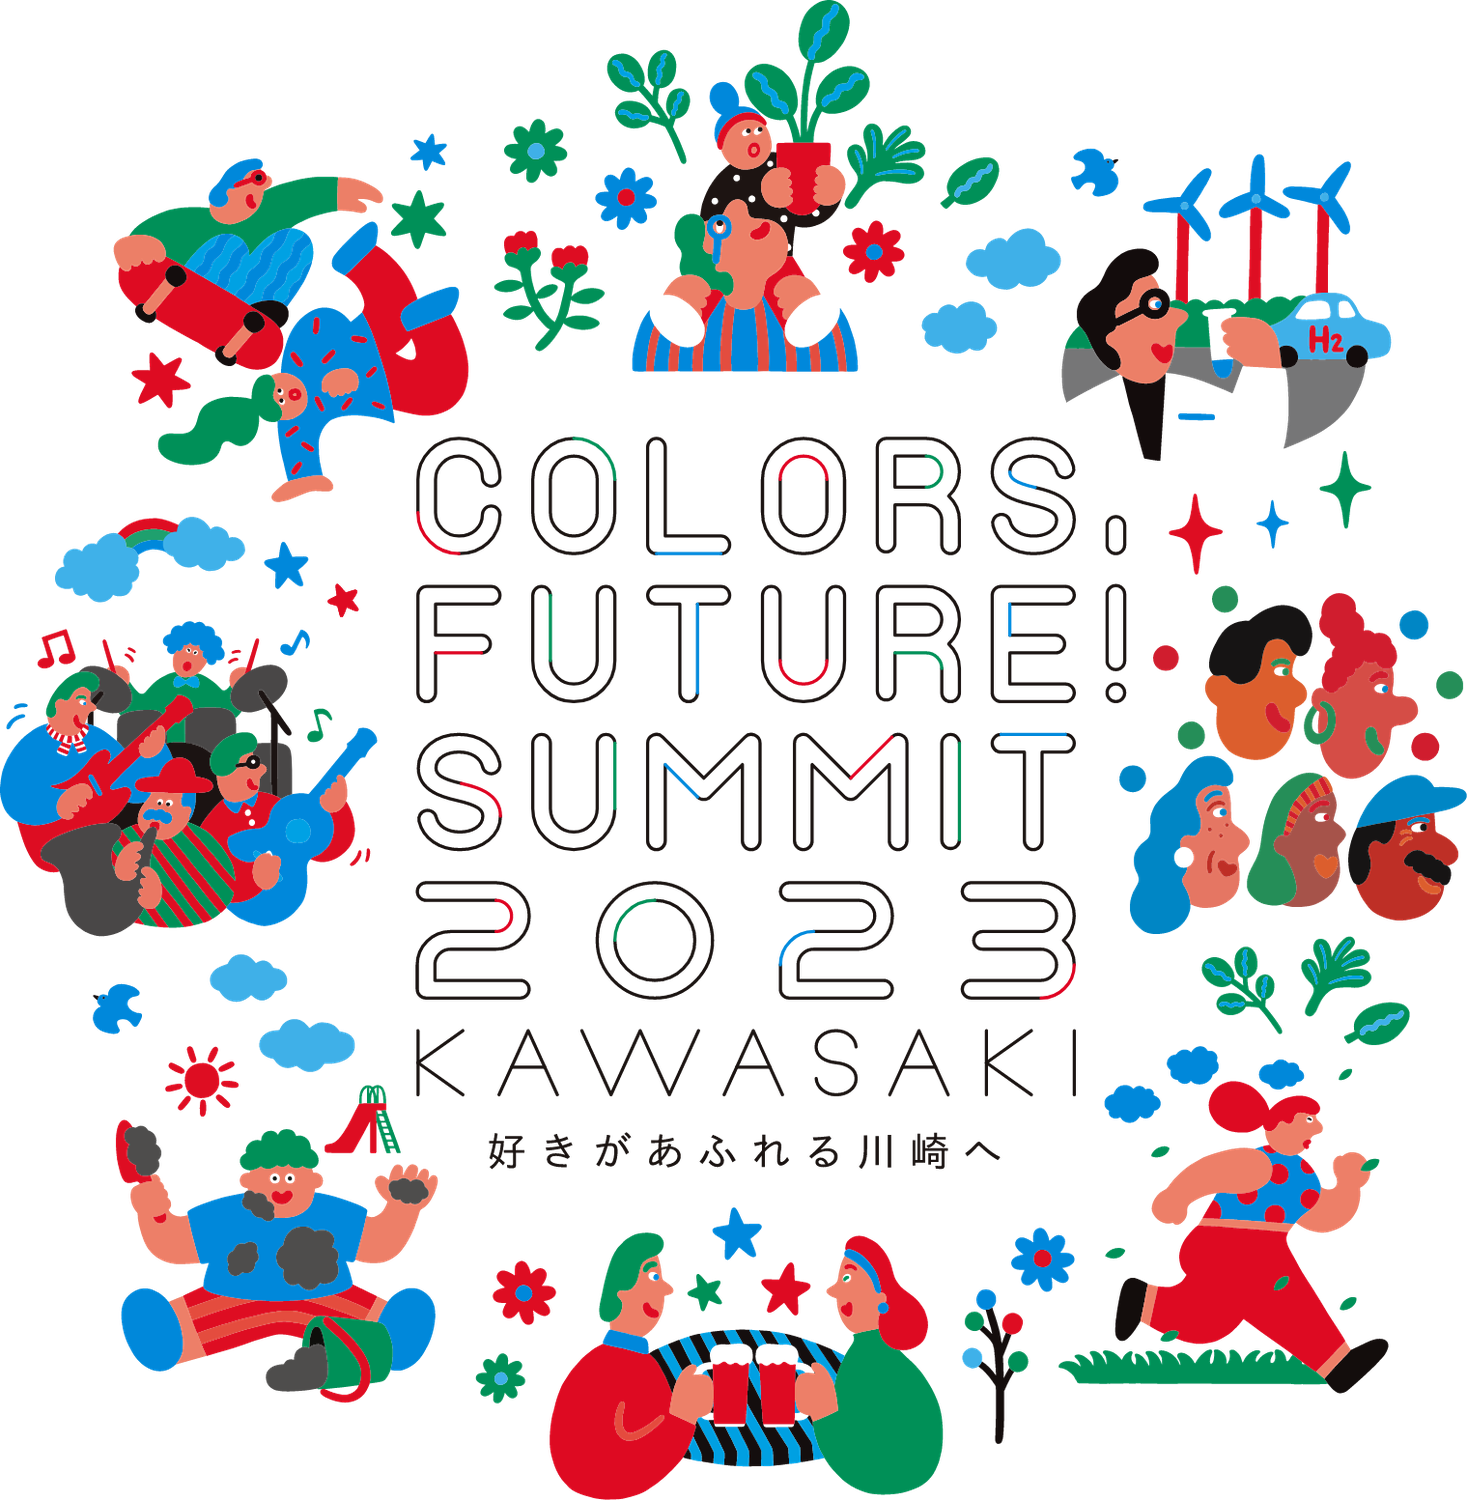 Colors,Future！Summit 2023 KAWASAKI